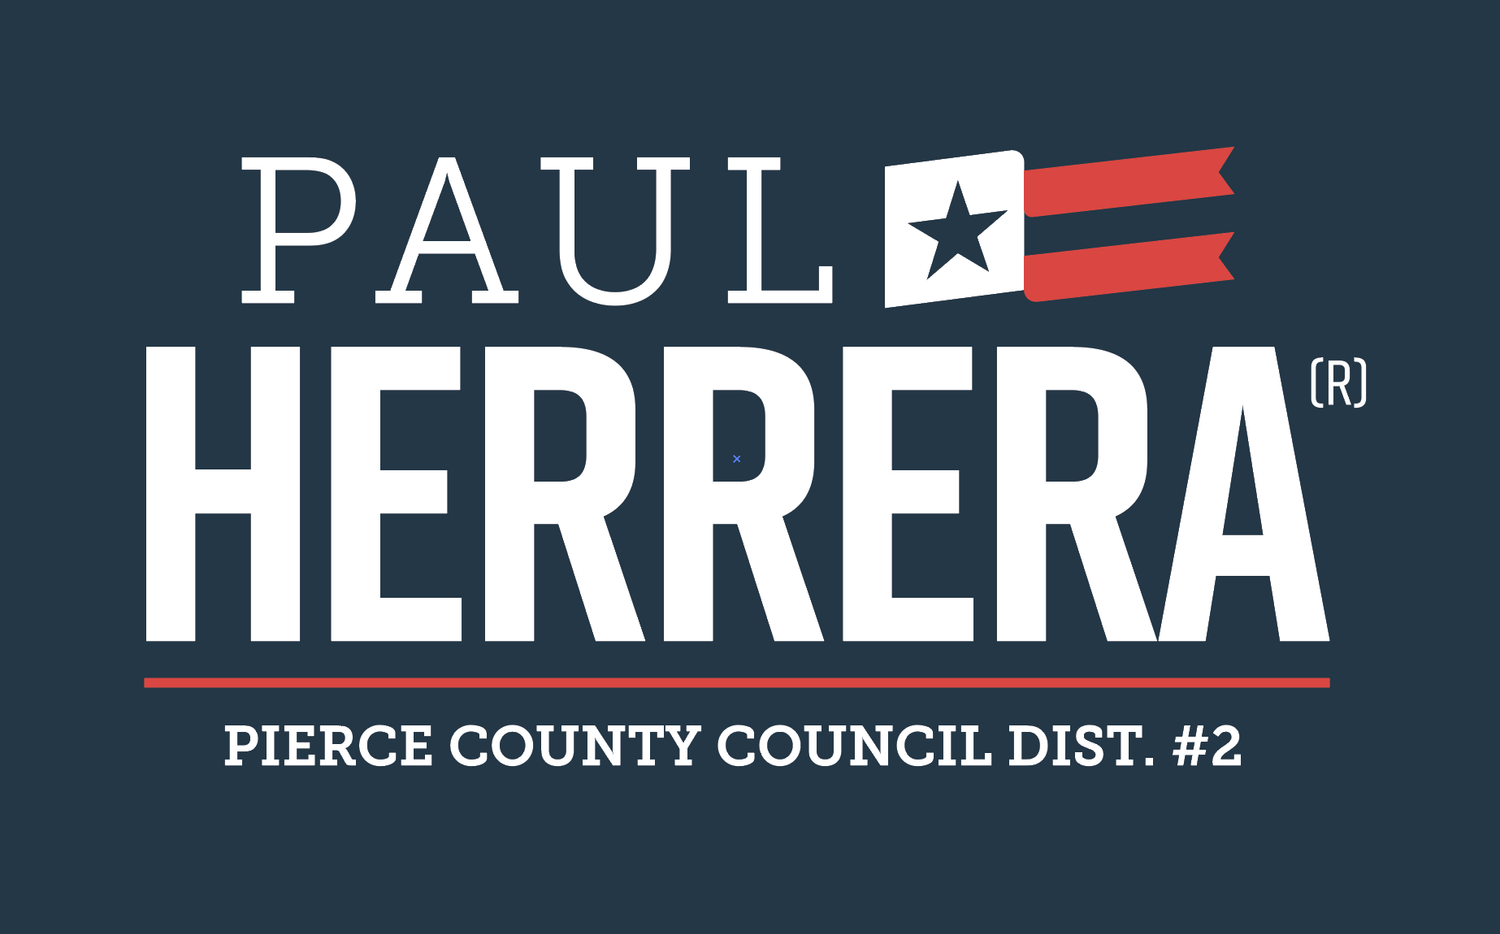 Paul Herrera for Pierce County Council